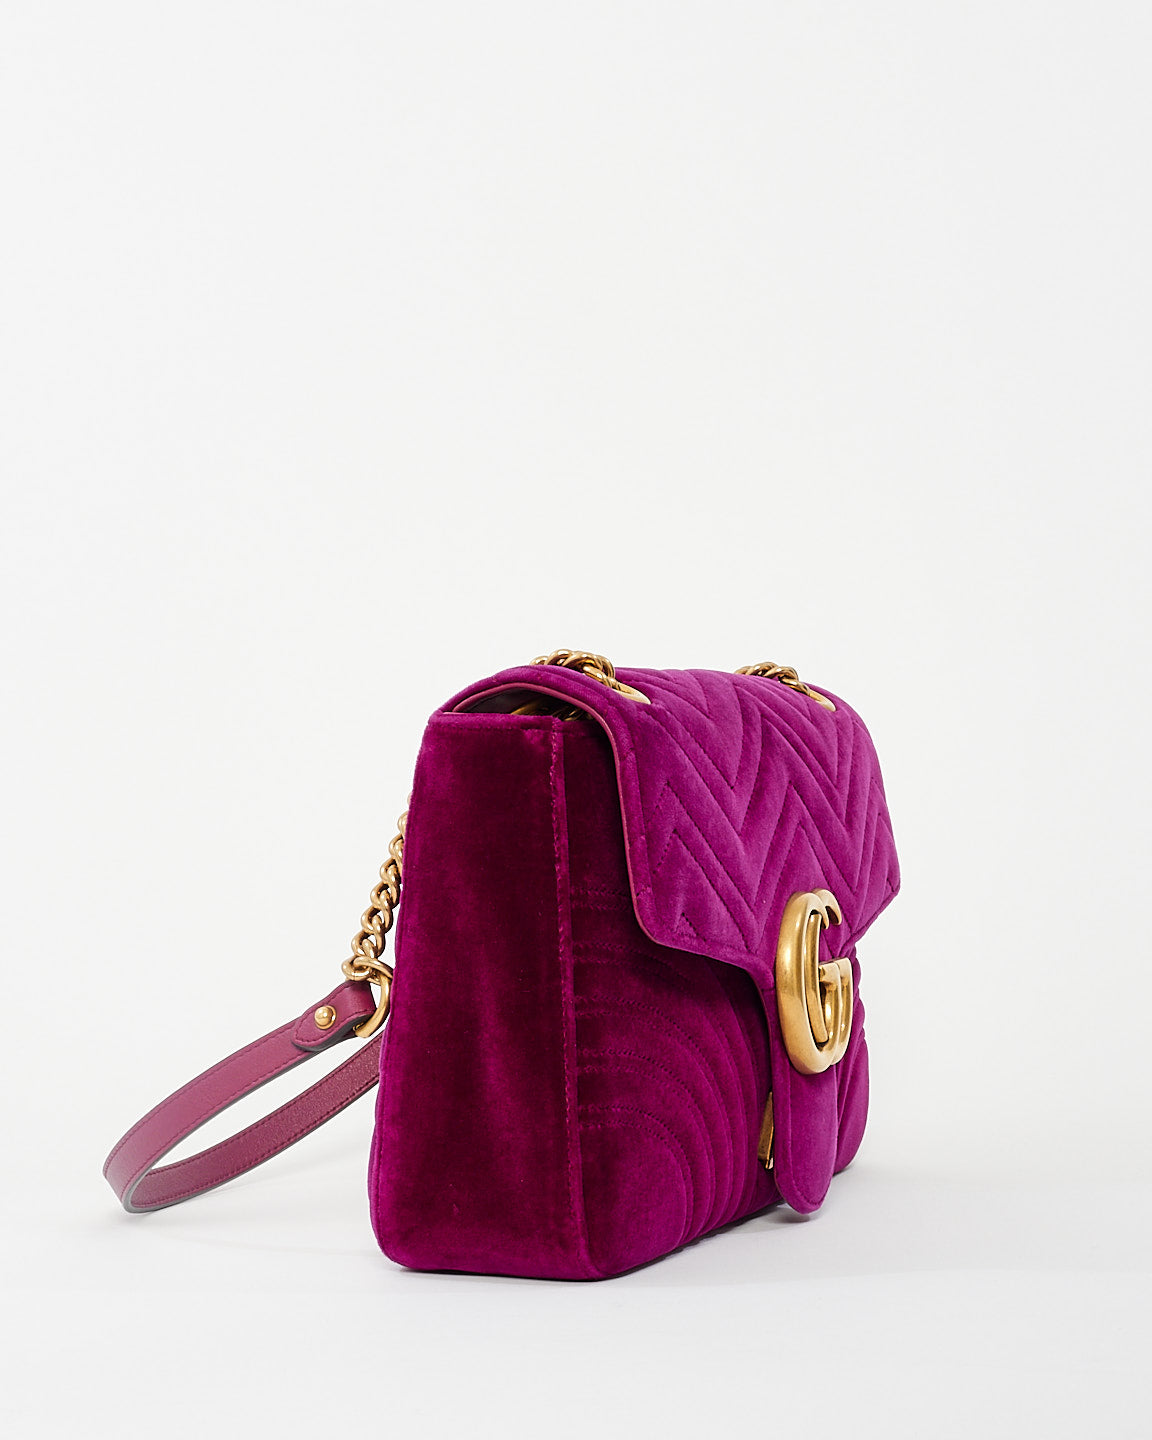 Gucci Fuschia Matelassé Velvet Medium GG Marmont Shoulder Bag